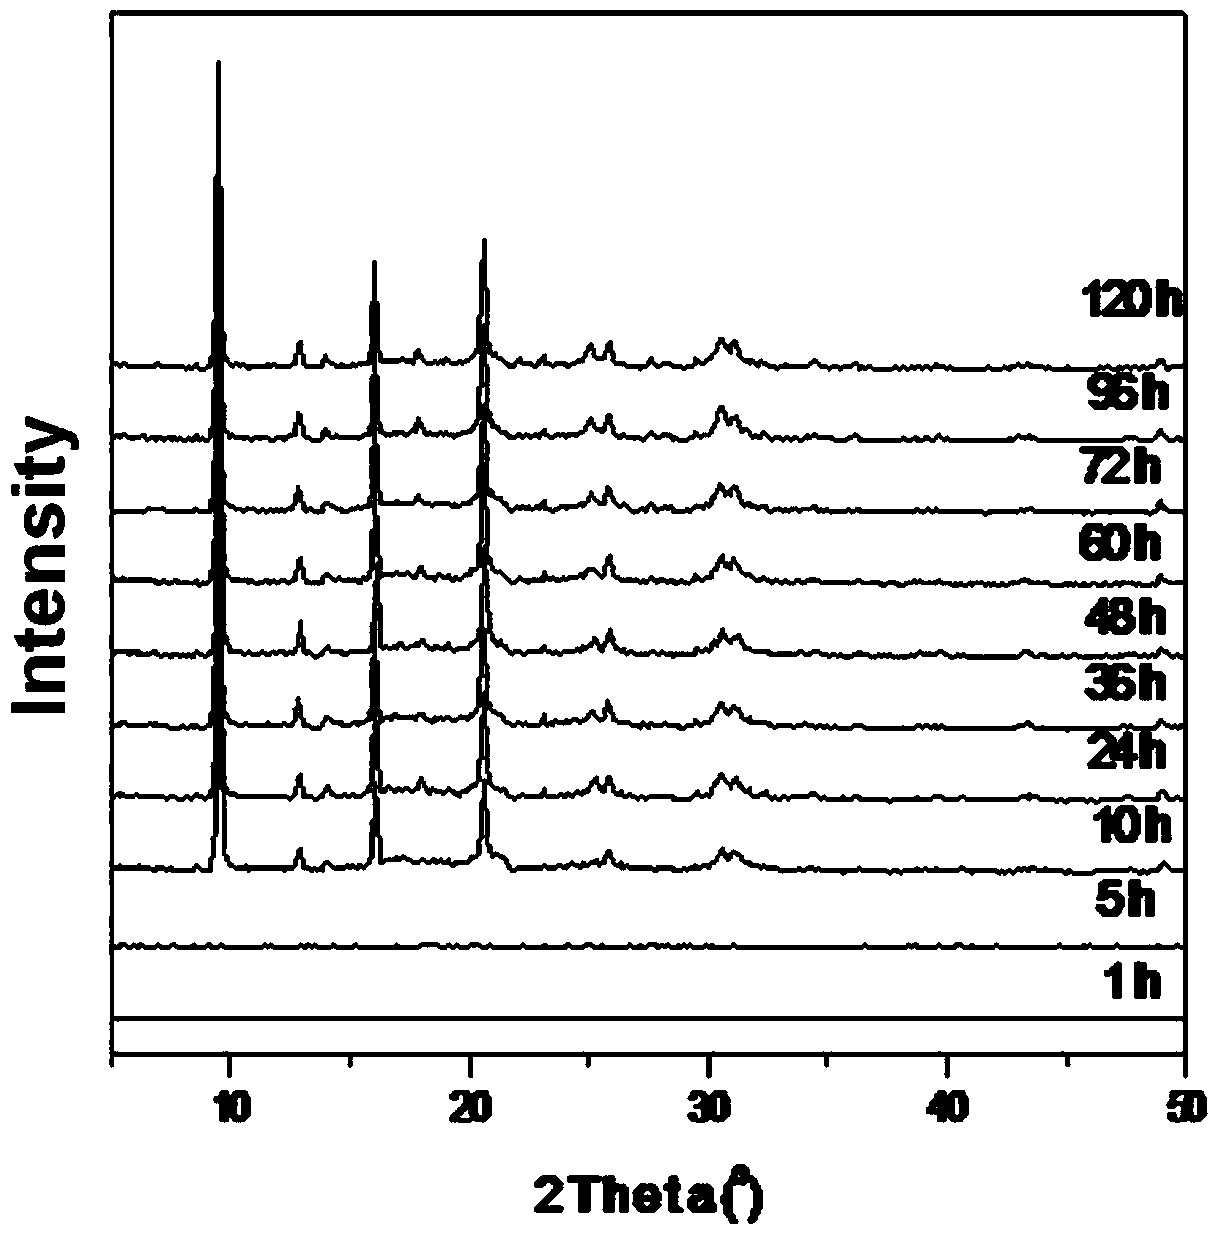 Sapo-34 molecular sieve raw powder and its synthesis method